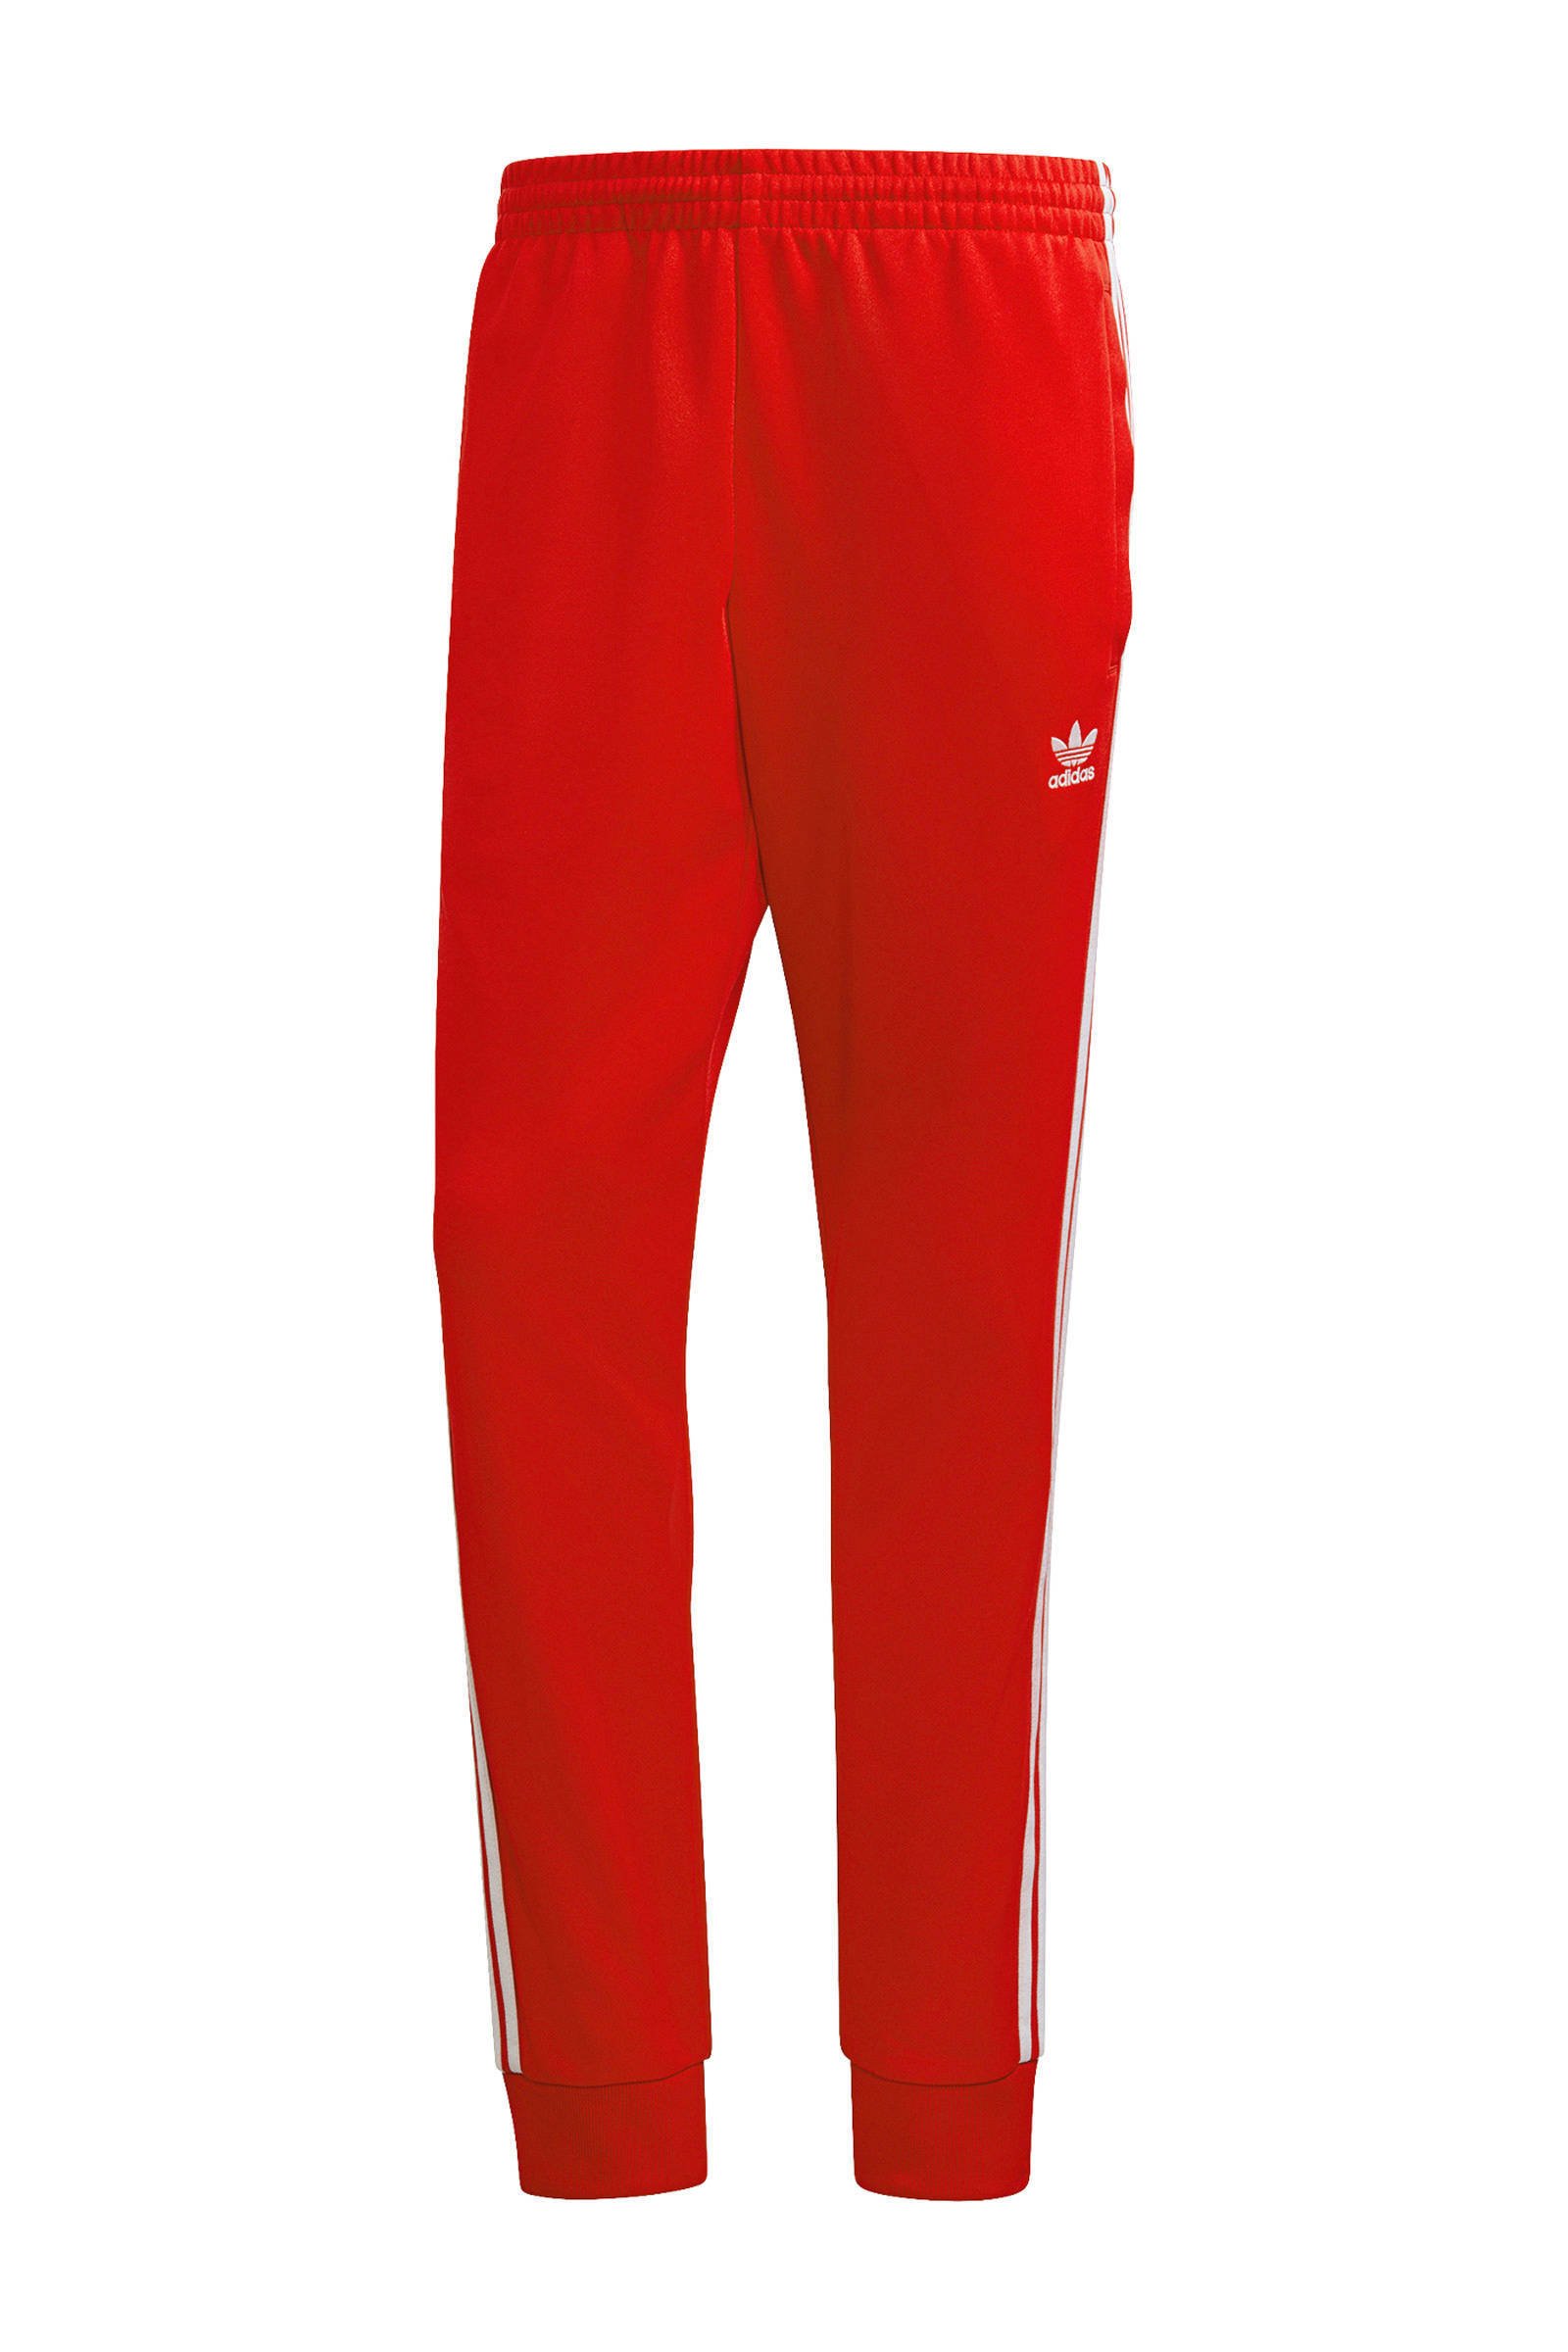 adidas Originals Superstar Adicolor trainingsbroek rood/wit | wehkamp